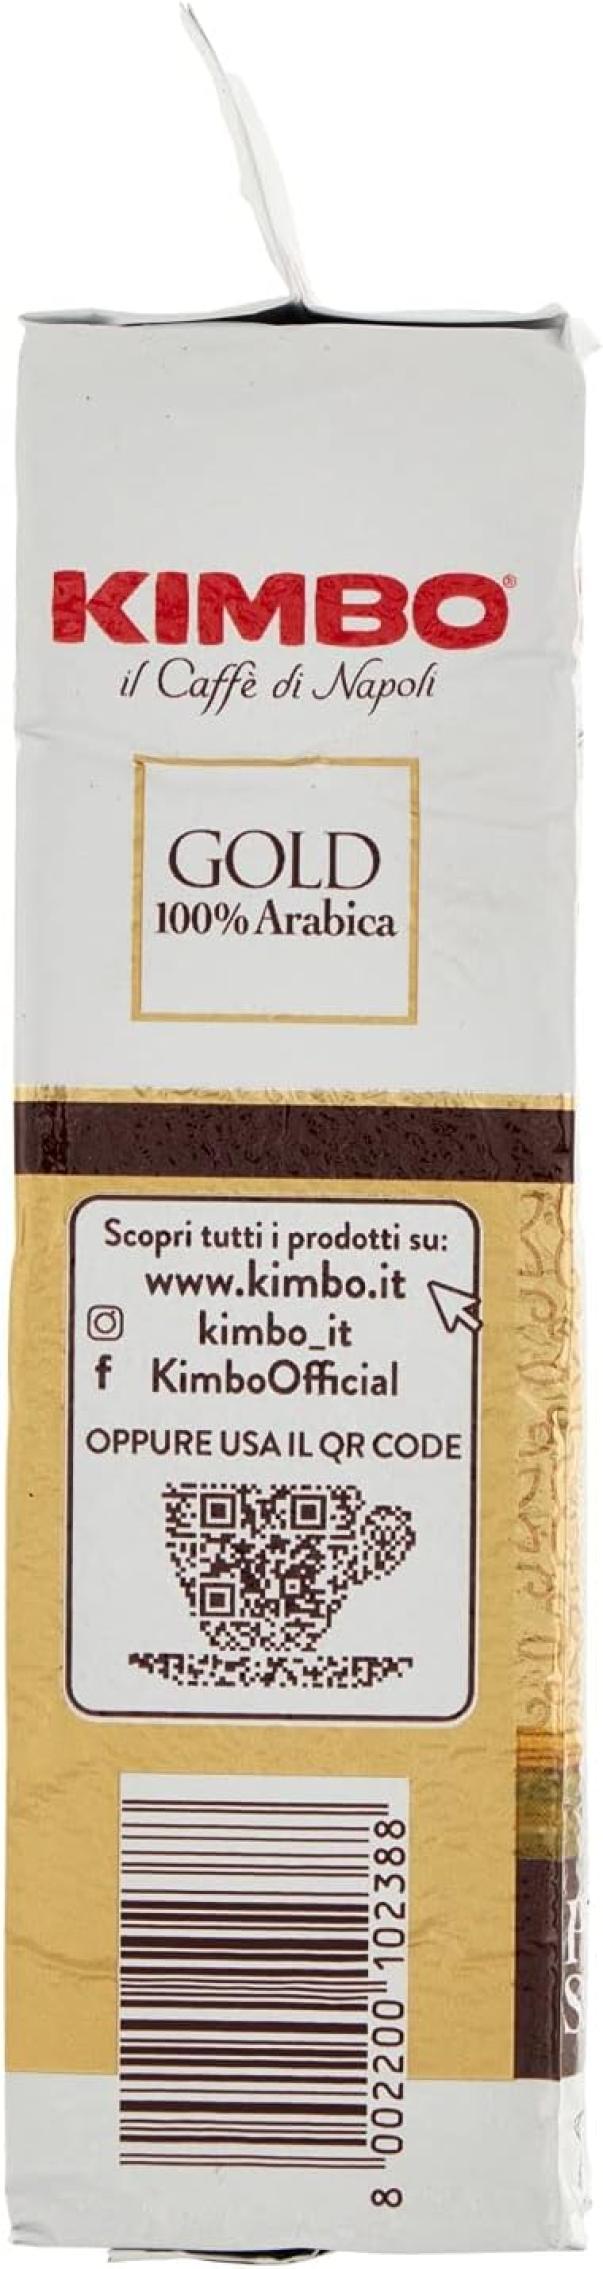 caffe-macinato-gold-100%-arabica-kimbo-250gr-2